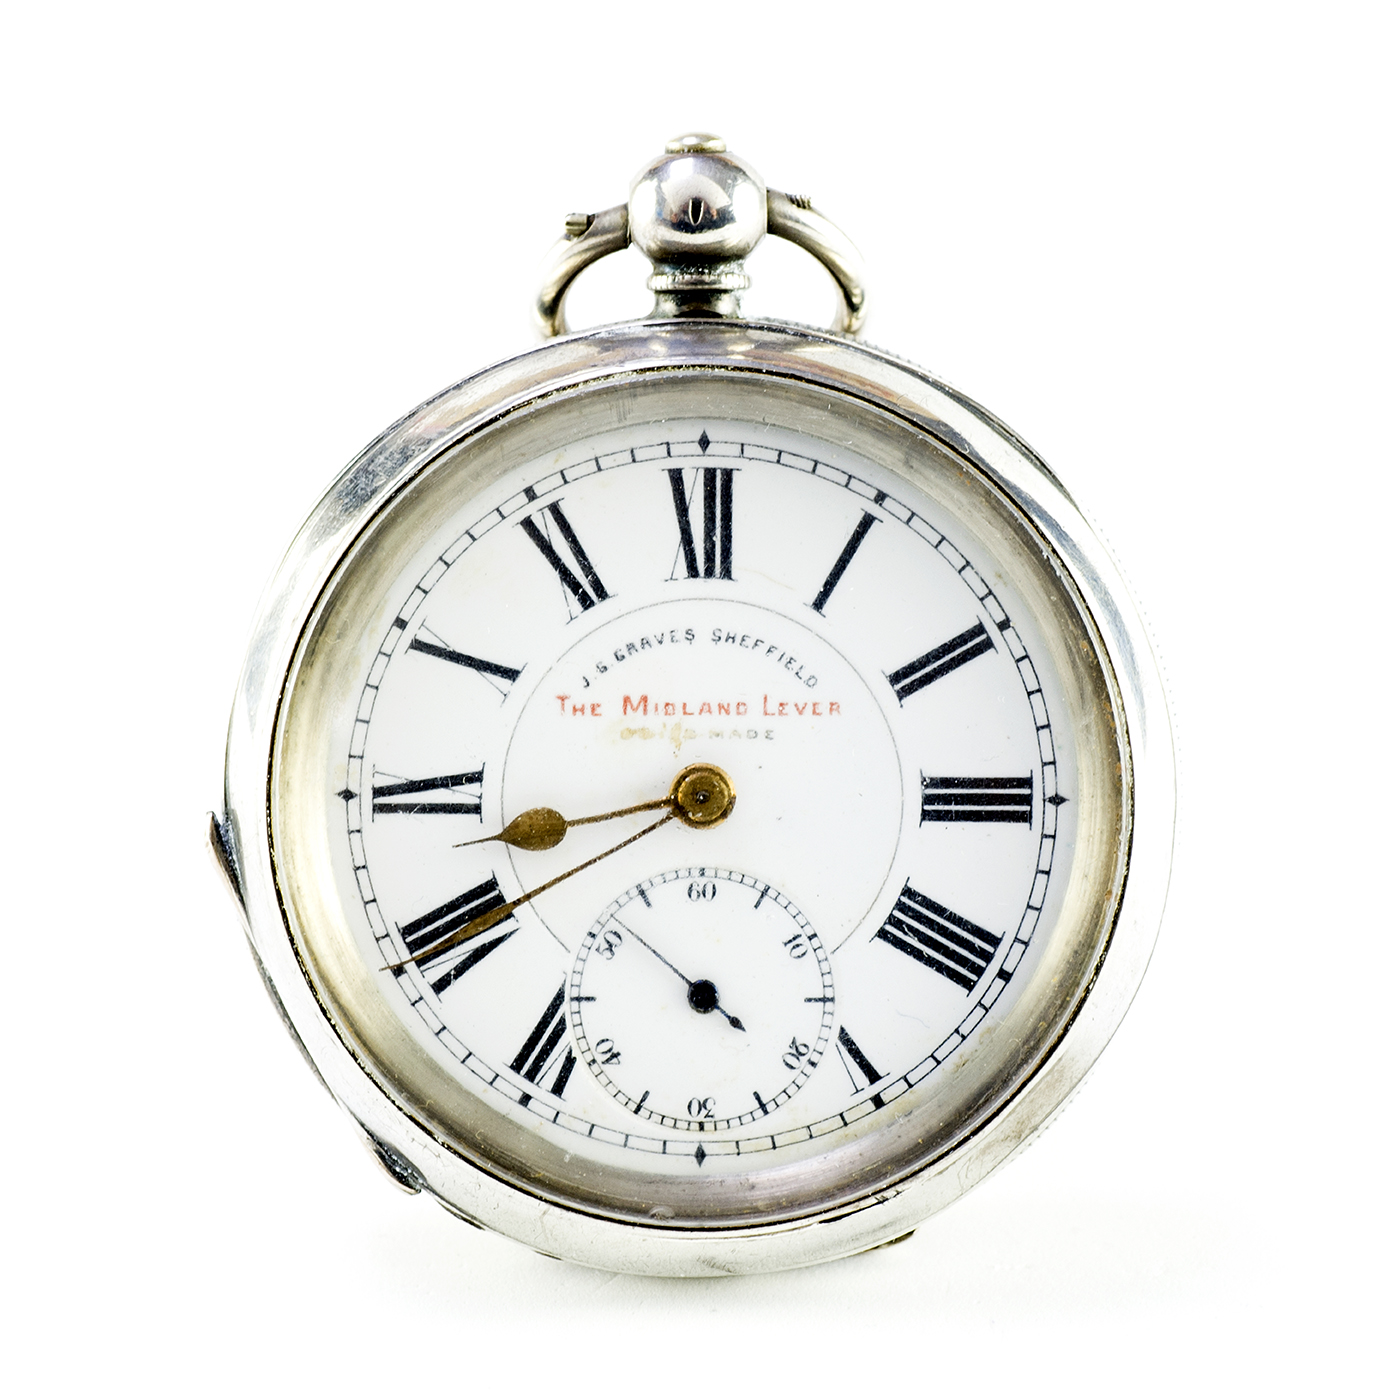 J.G. GRAVES. Reloj de bolsillo, lepine.Sheffield, 1906